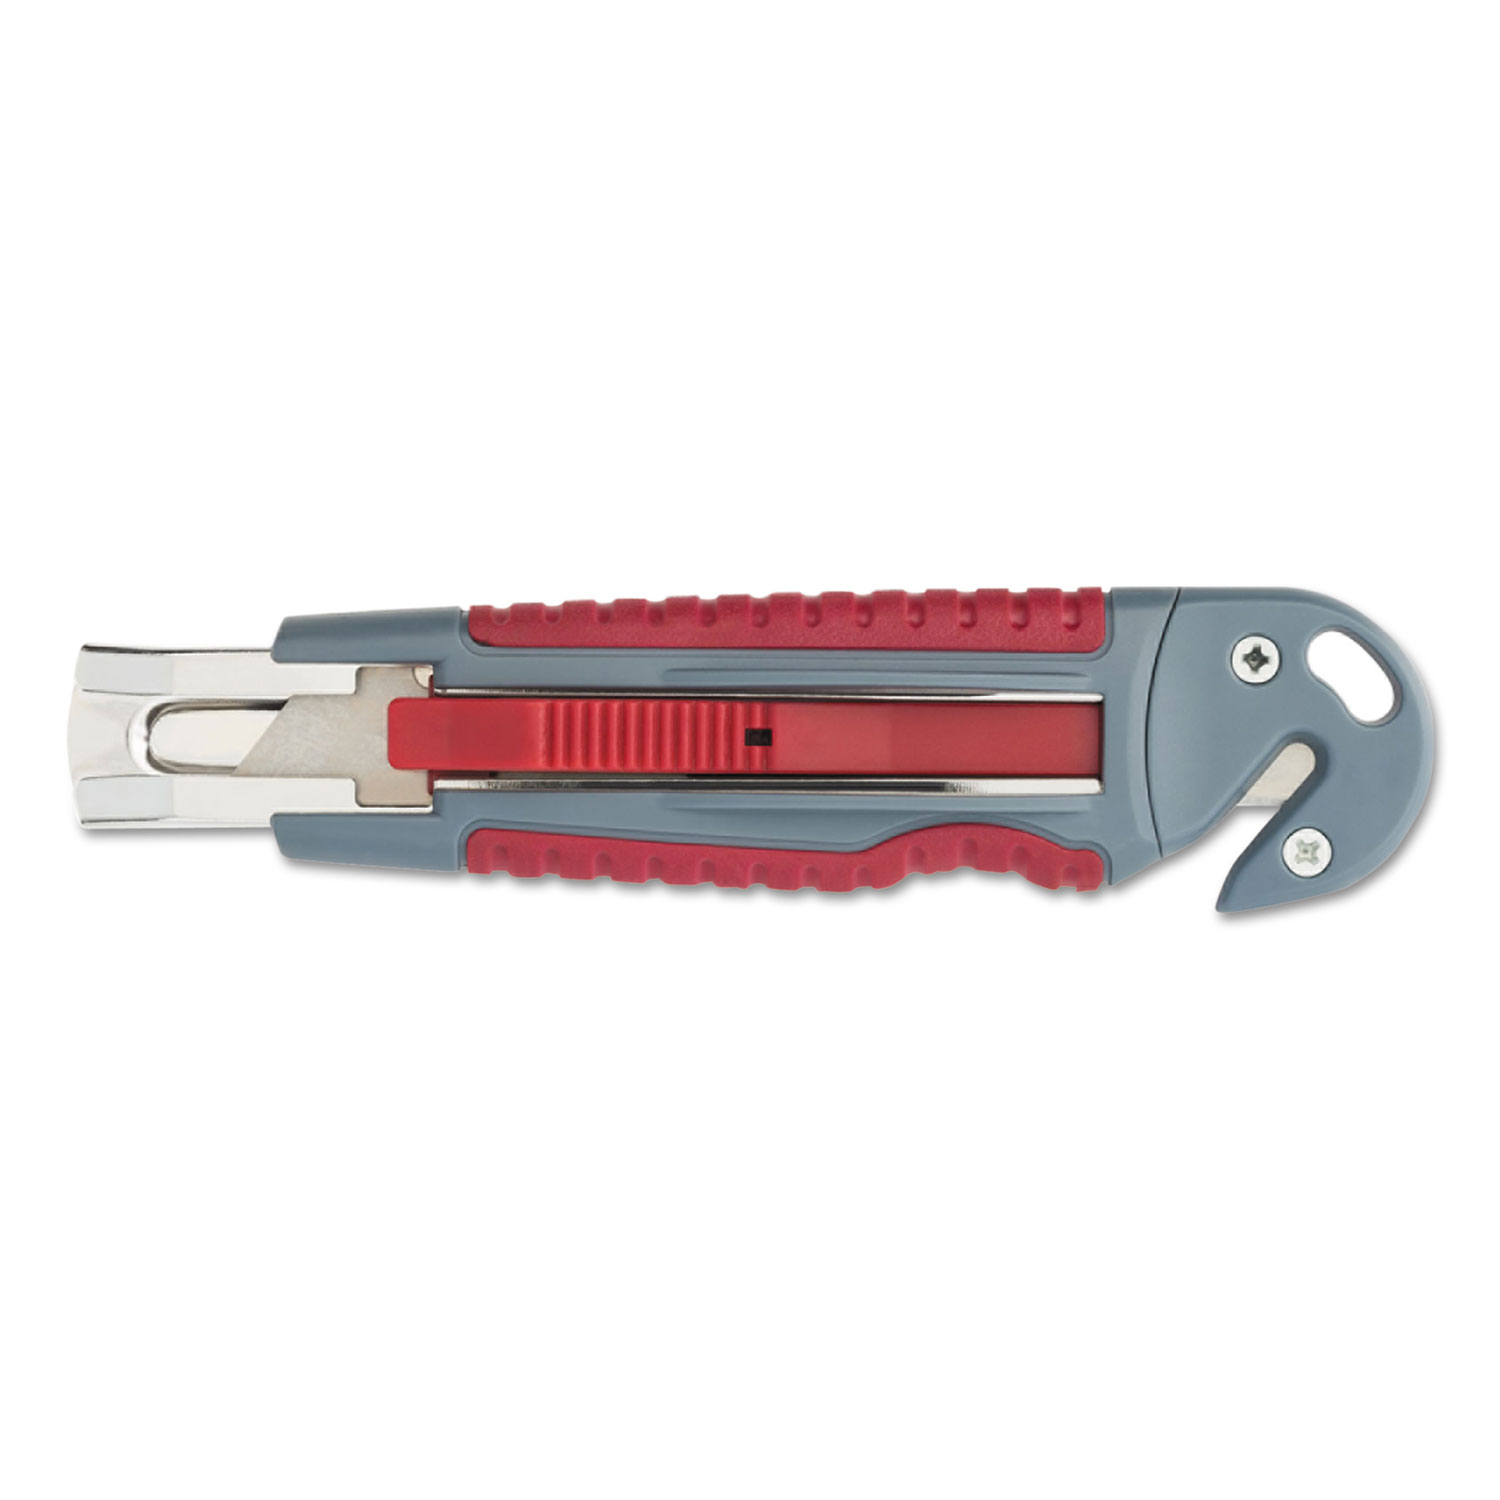 Titanium Auto-Retract Utility Knife with Carton Slicer, Gray/Red, 3 1/2 Blade